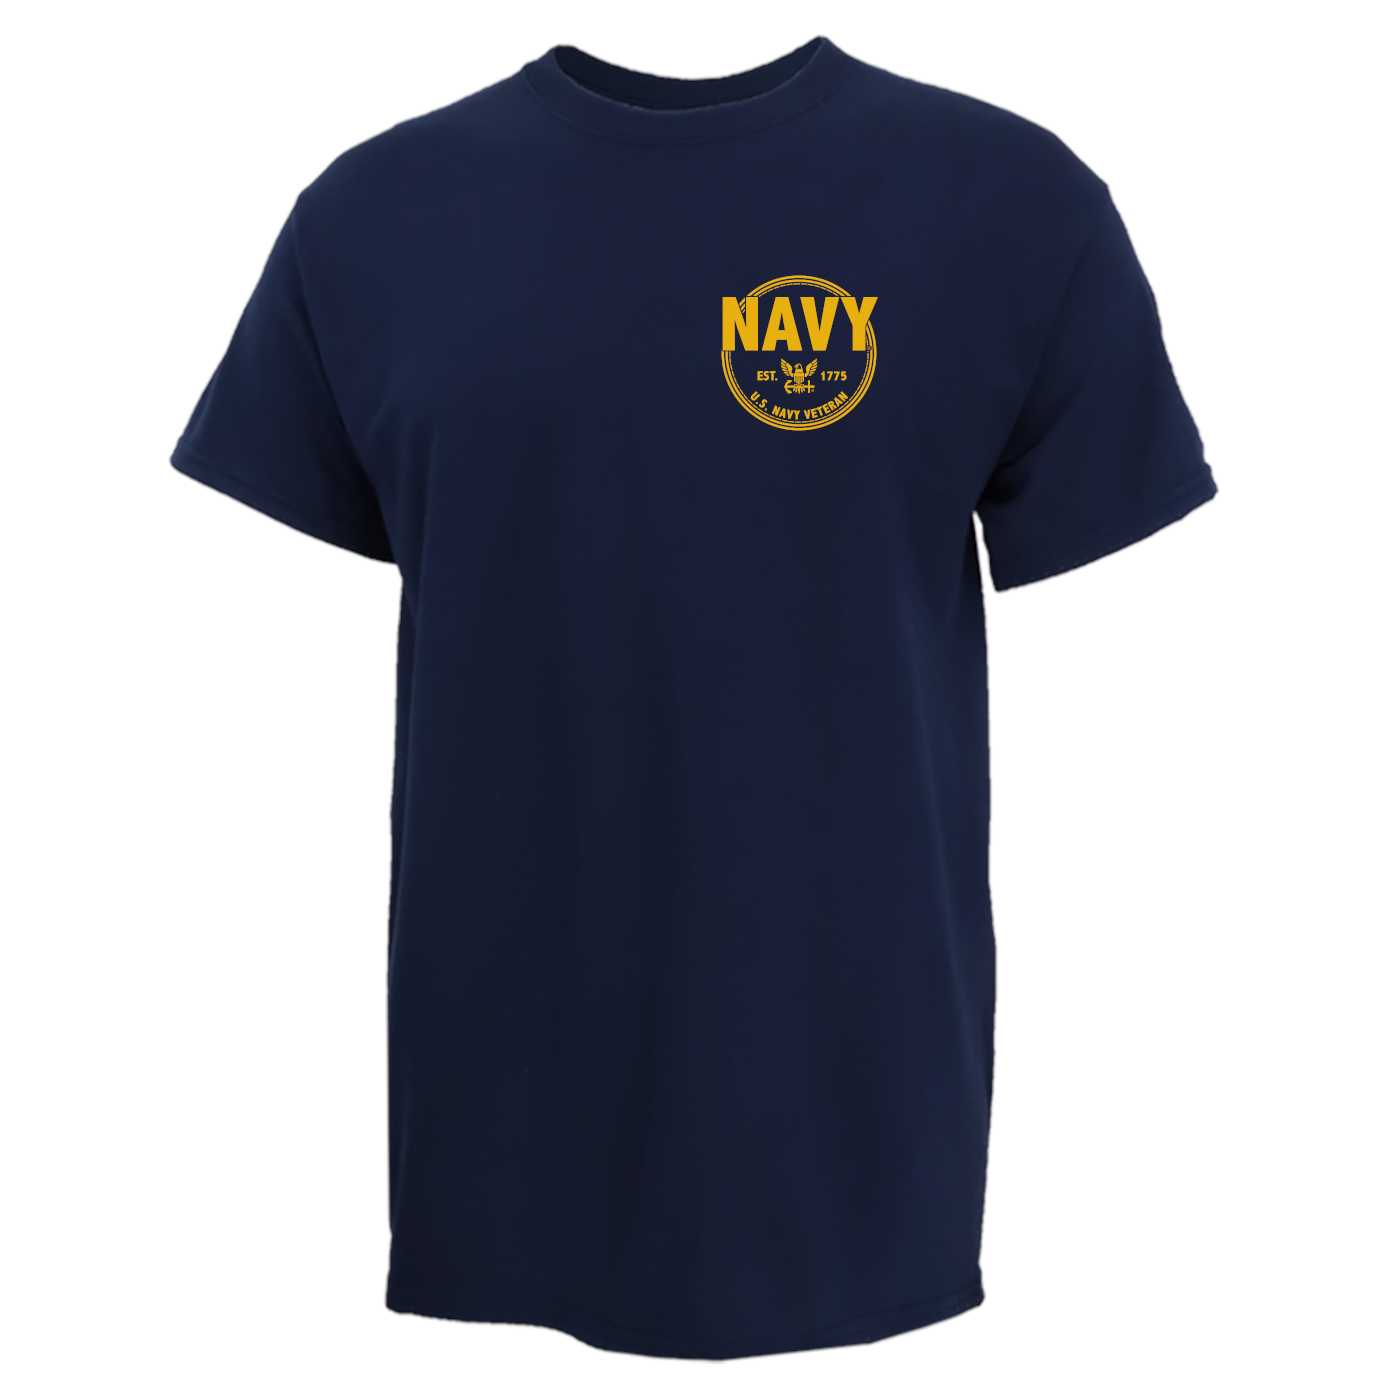 Navy Veteran T-Shirt